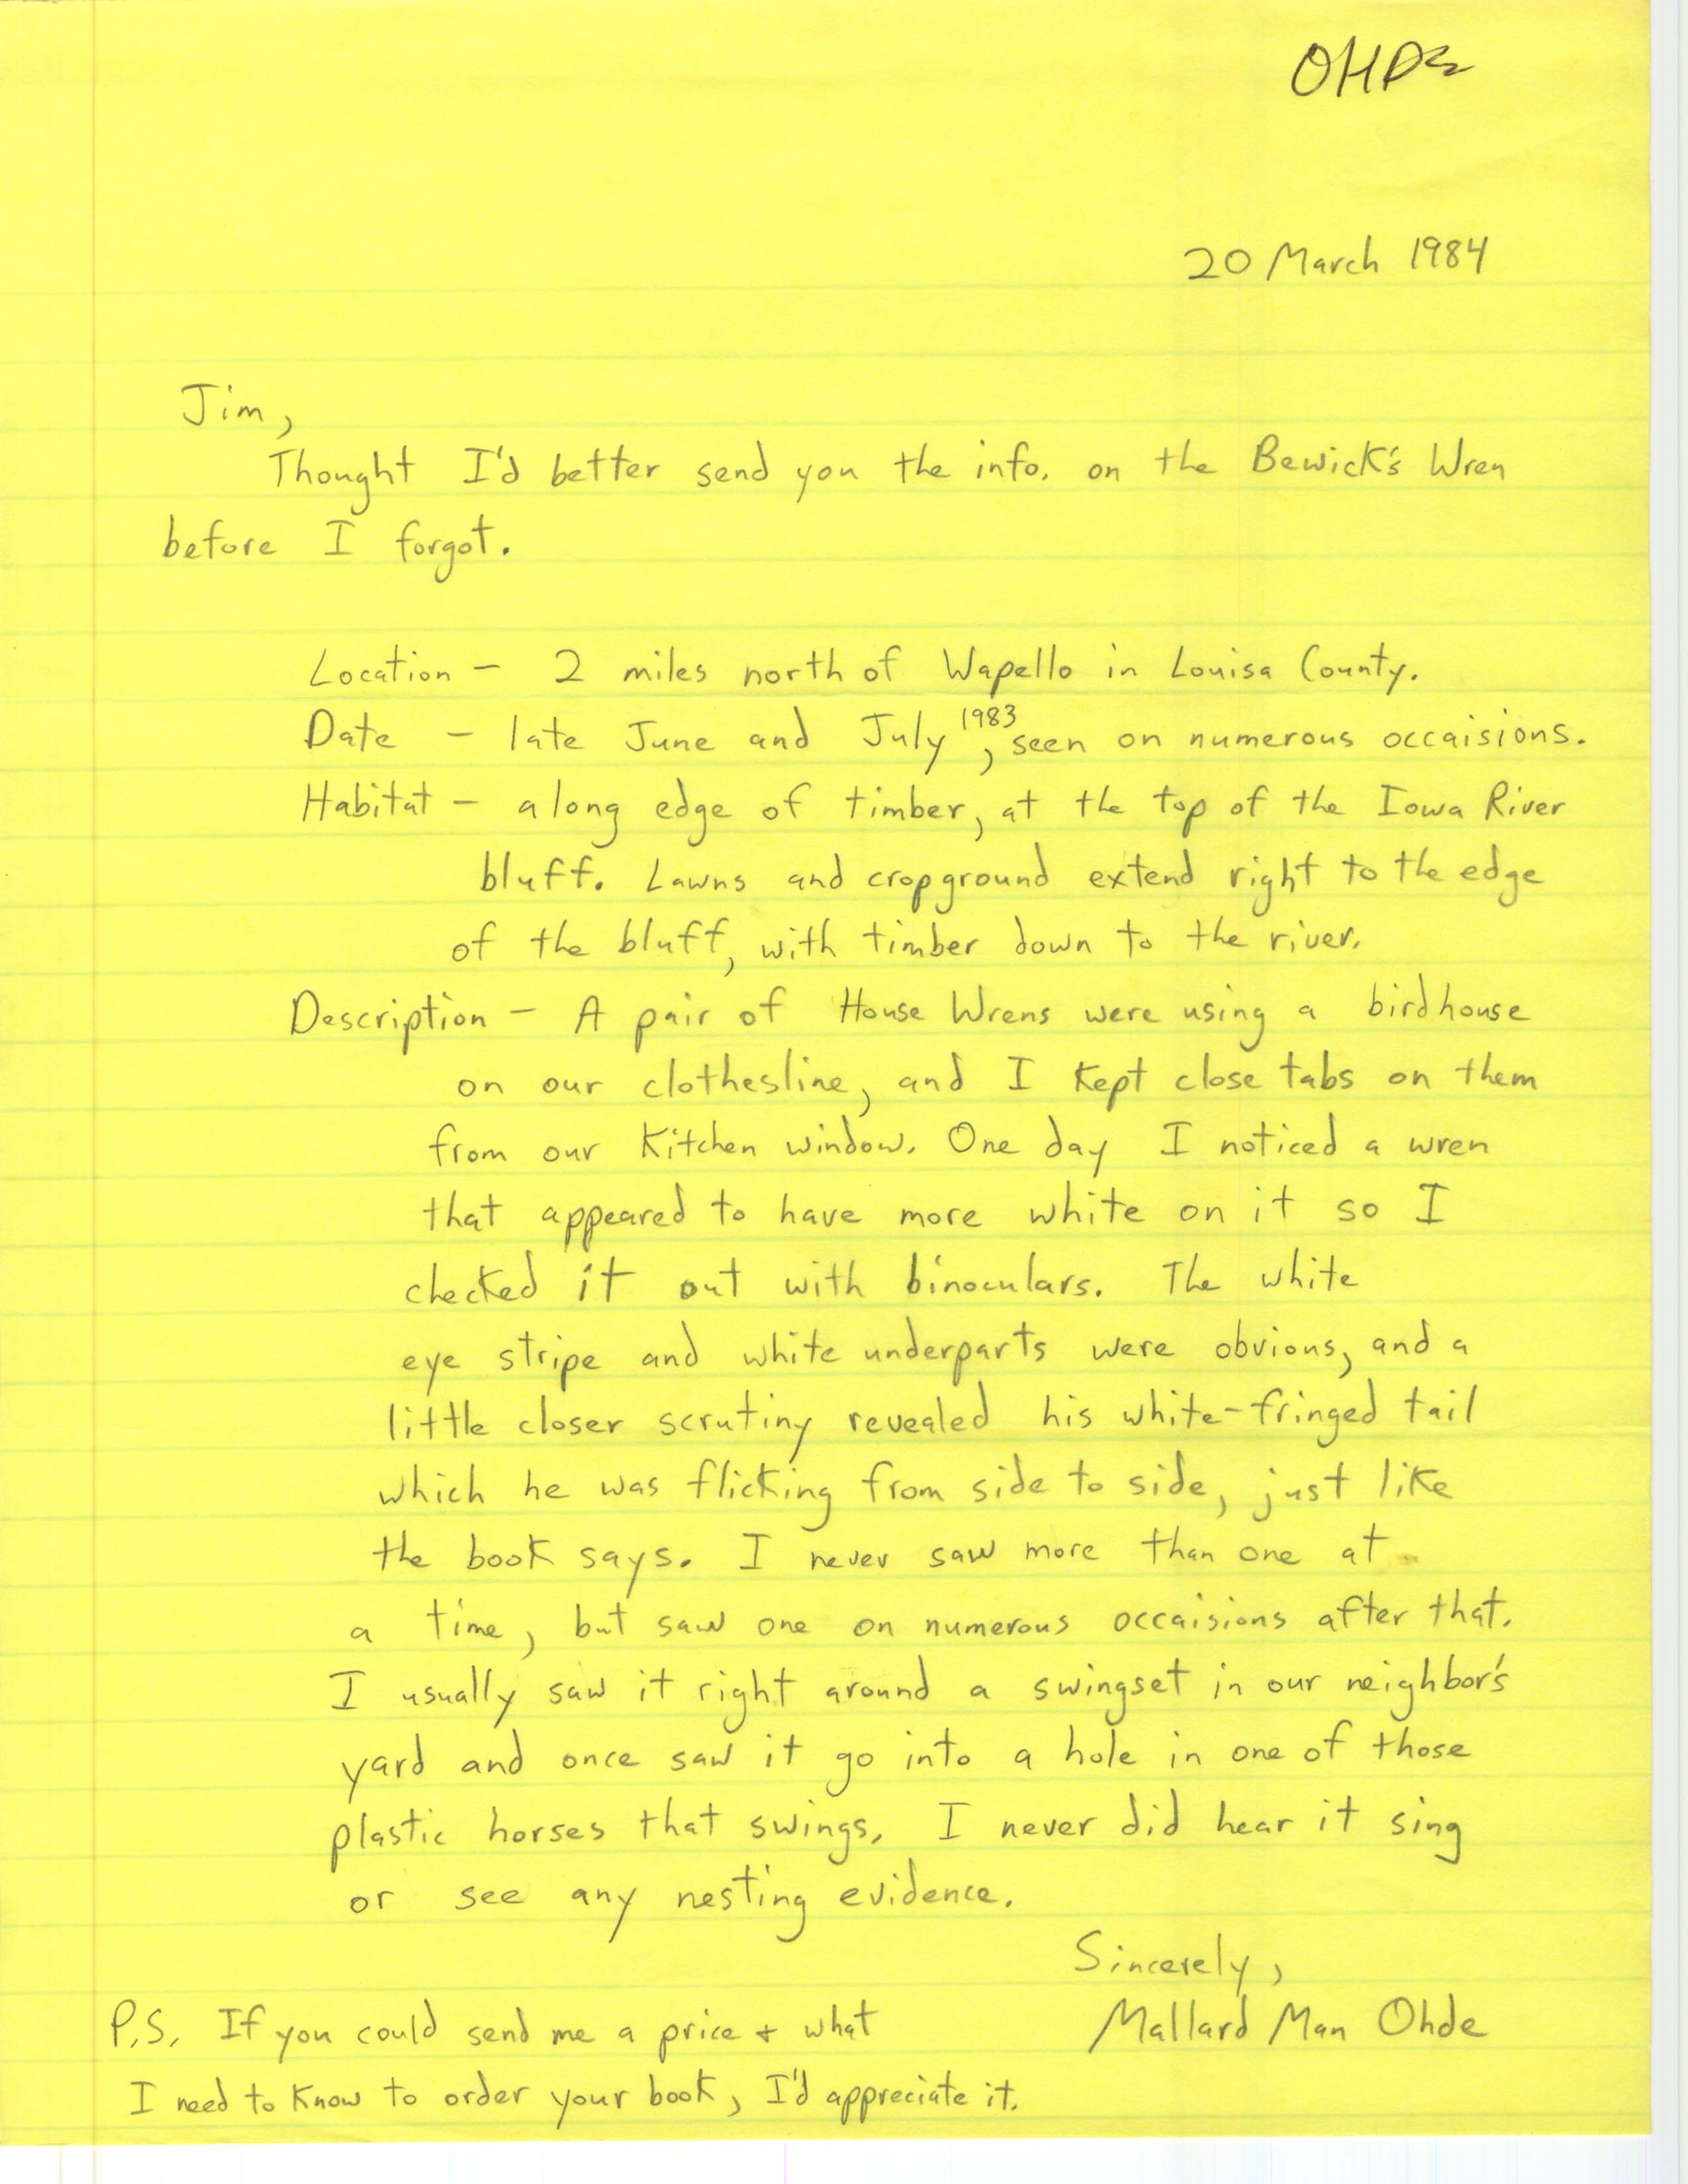 Bill Ohde letter to Jim Dinsmore regarding a Berwick's Wren, March 20, 1984